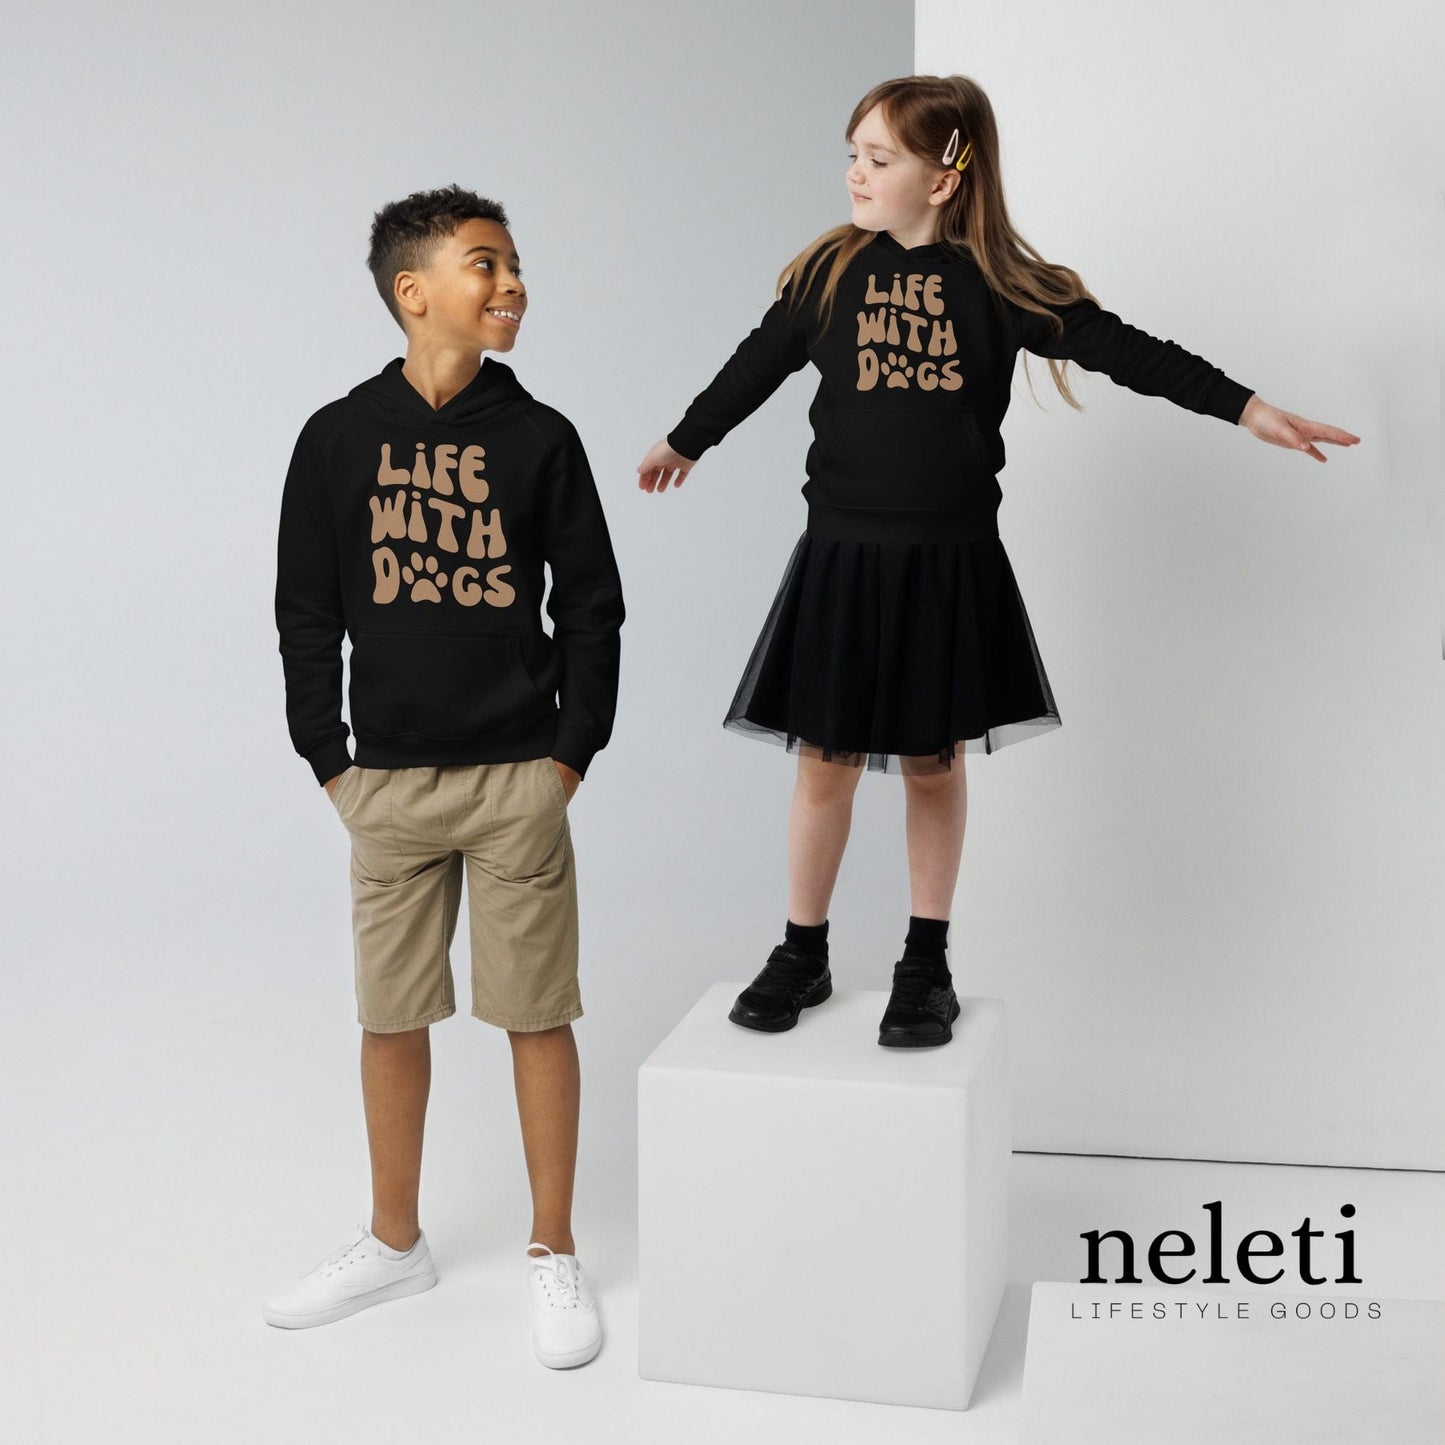 neleti.com-black-kids-hoodies-with-puff-print